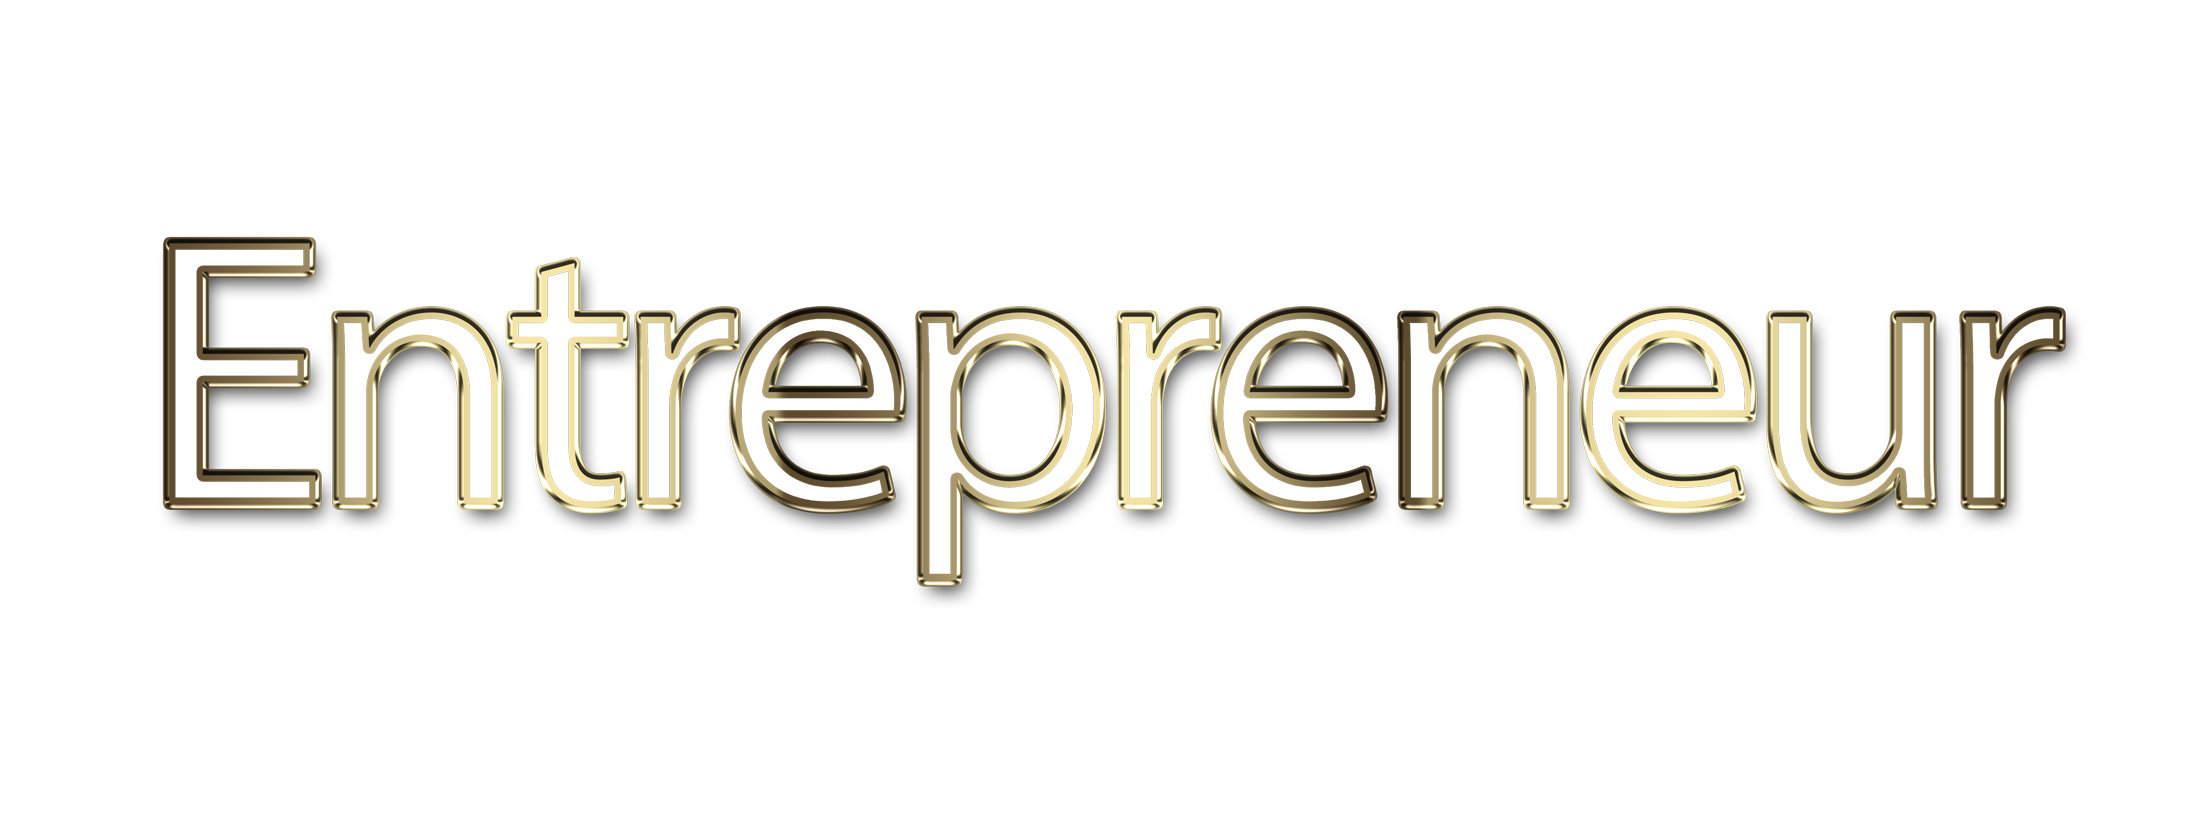 Entrepreneur png, word Entrepreneur png, Entrepreneur word png, Entrepreneur text png, Entrepreneur letters png, Entrepreneur word art typography PNG images, transparent png